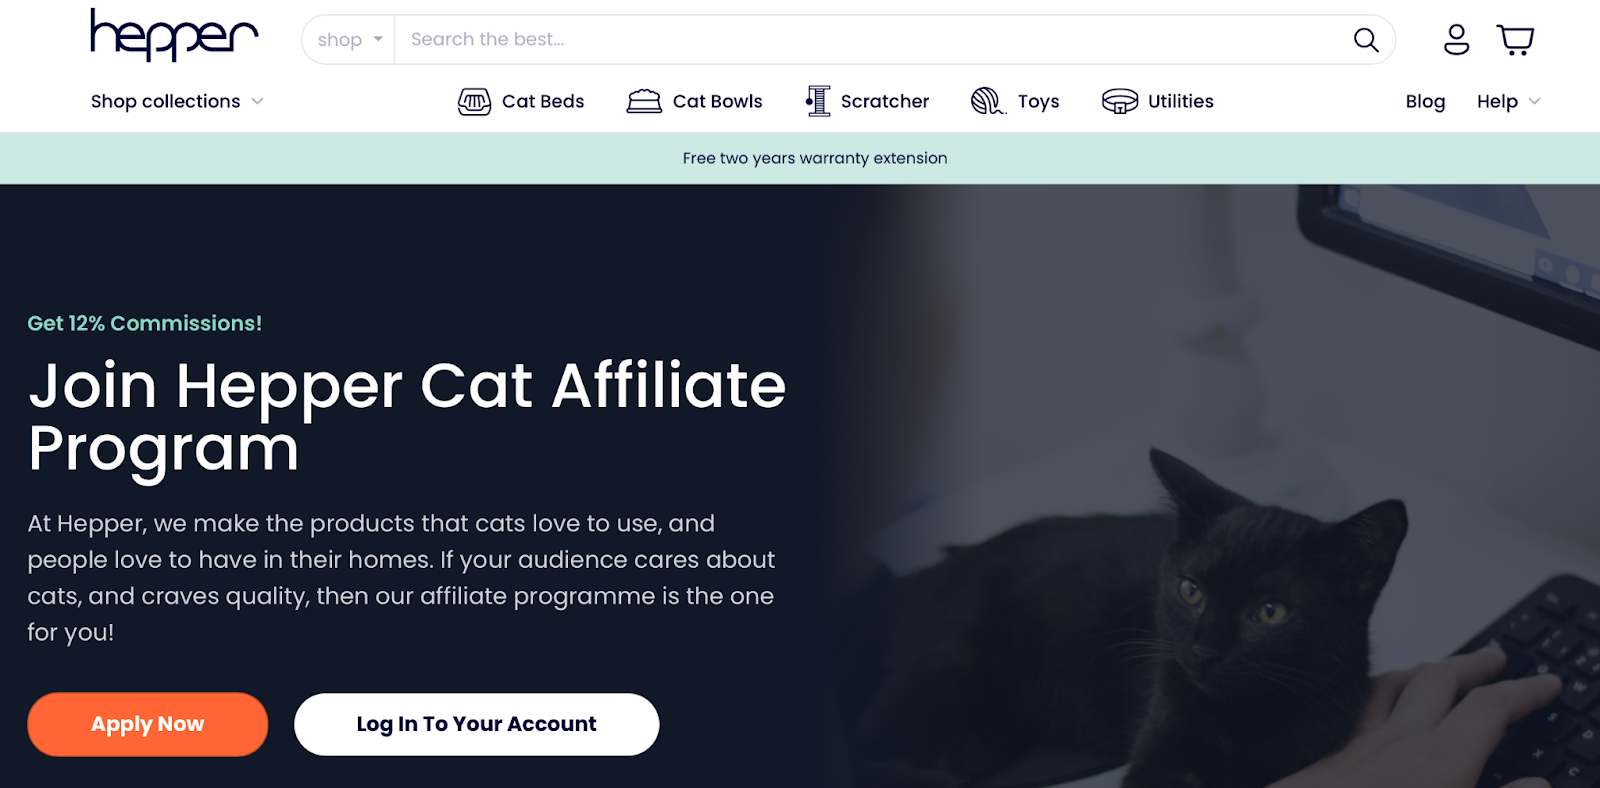 Pet affiliate program Hepper's landing page for affiliates.